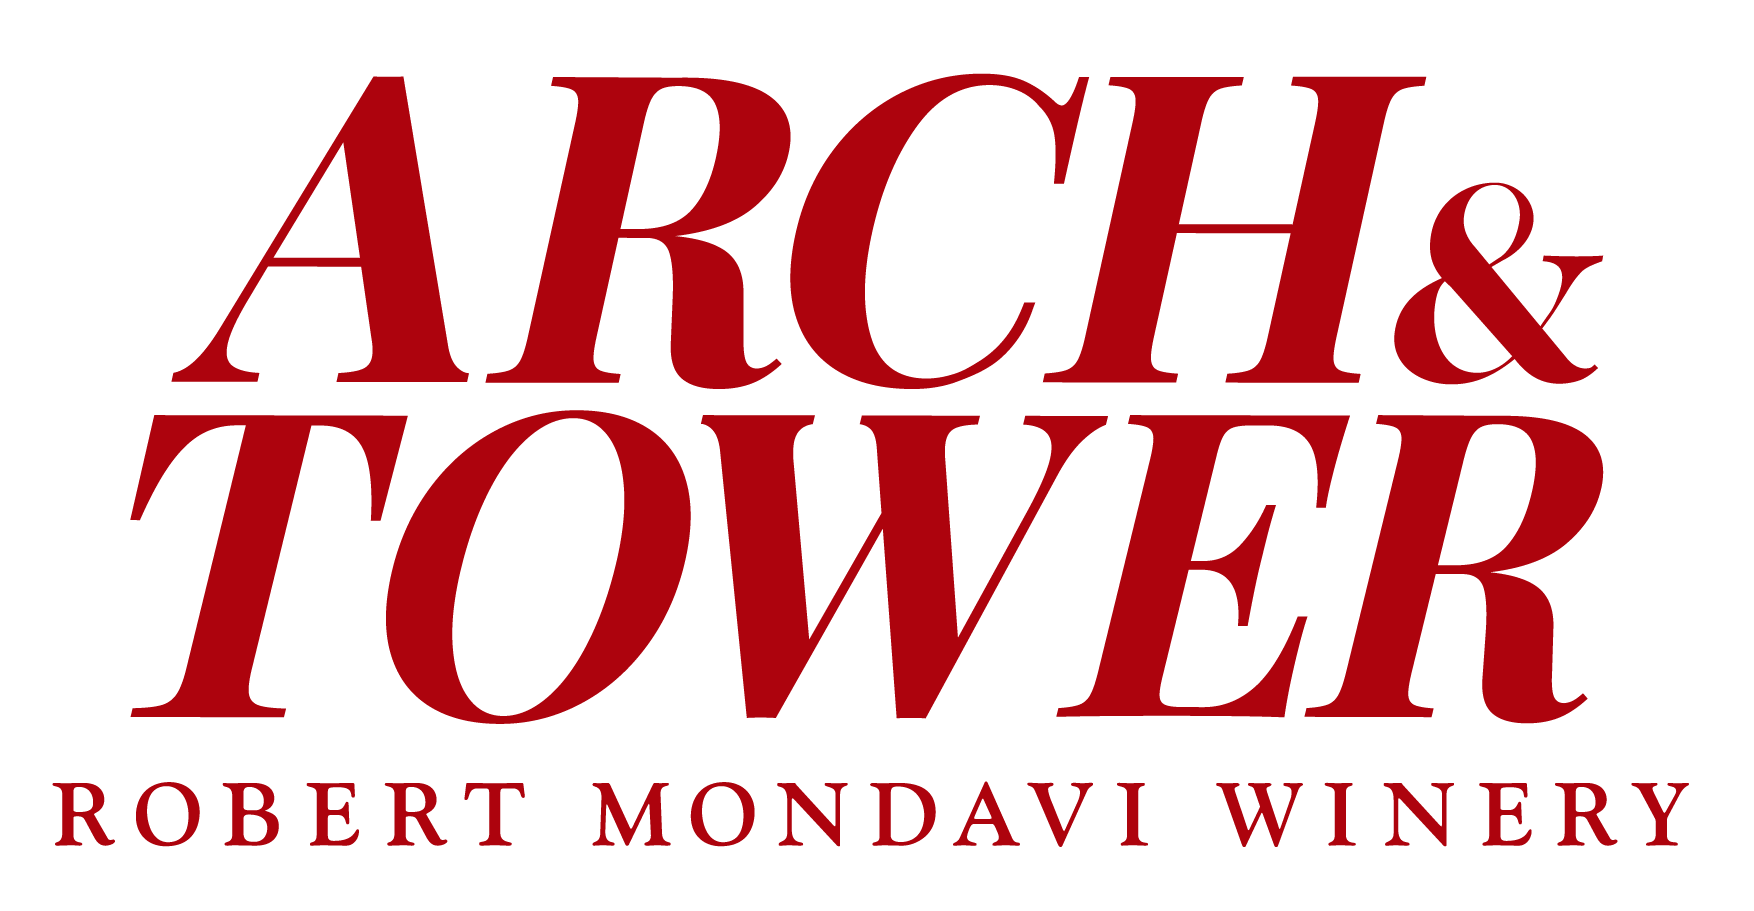 Robert Mondavi Winery's Arch & Tower